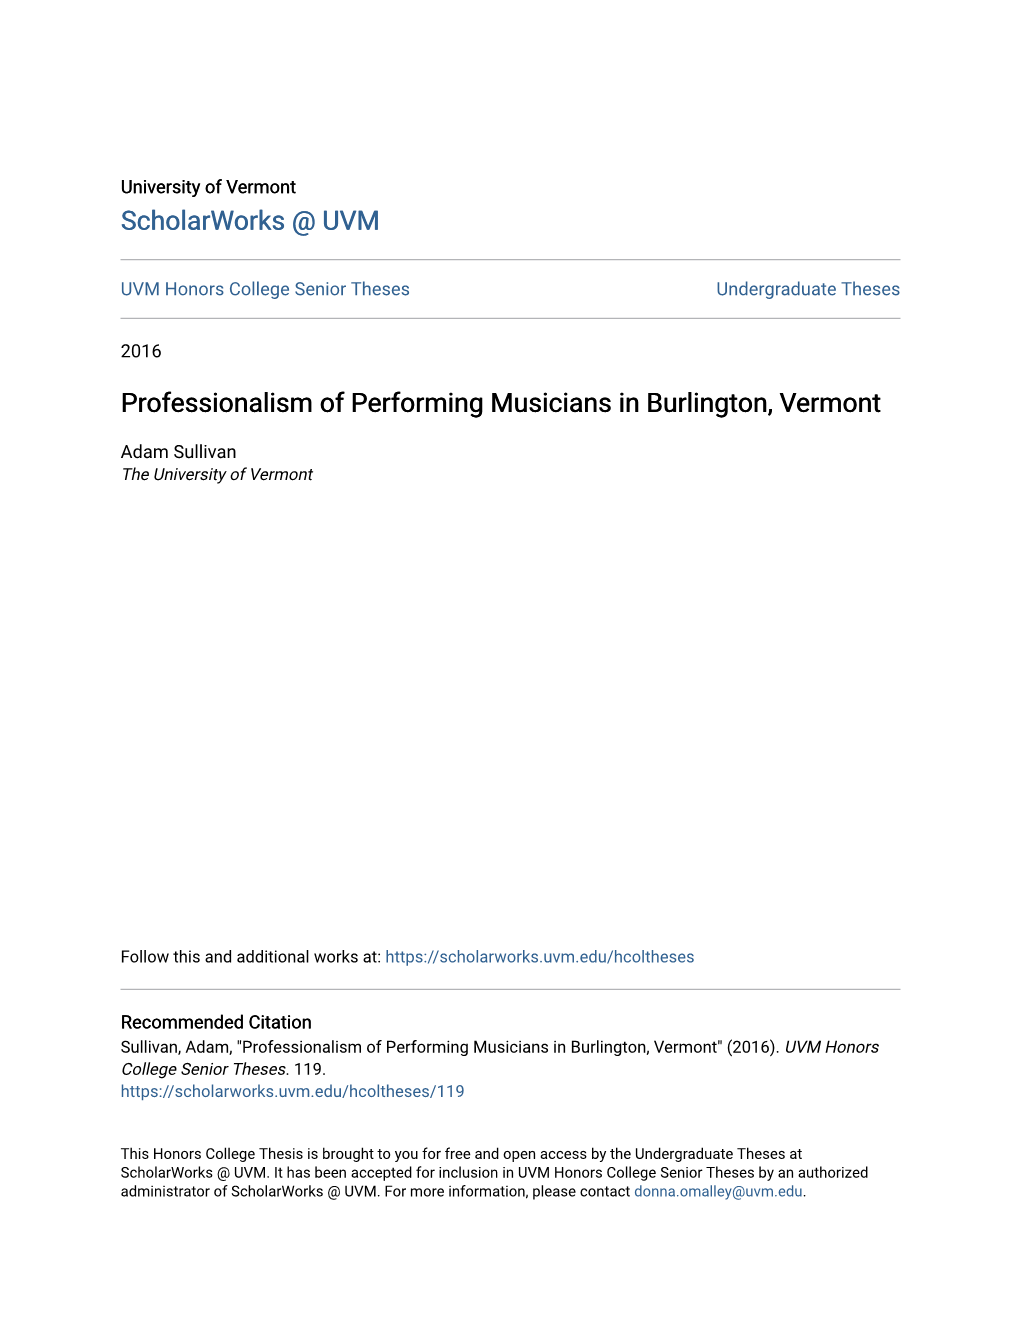 Professionalism of Performing Musicians in Burlington, Vermont